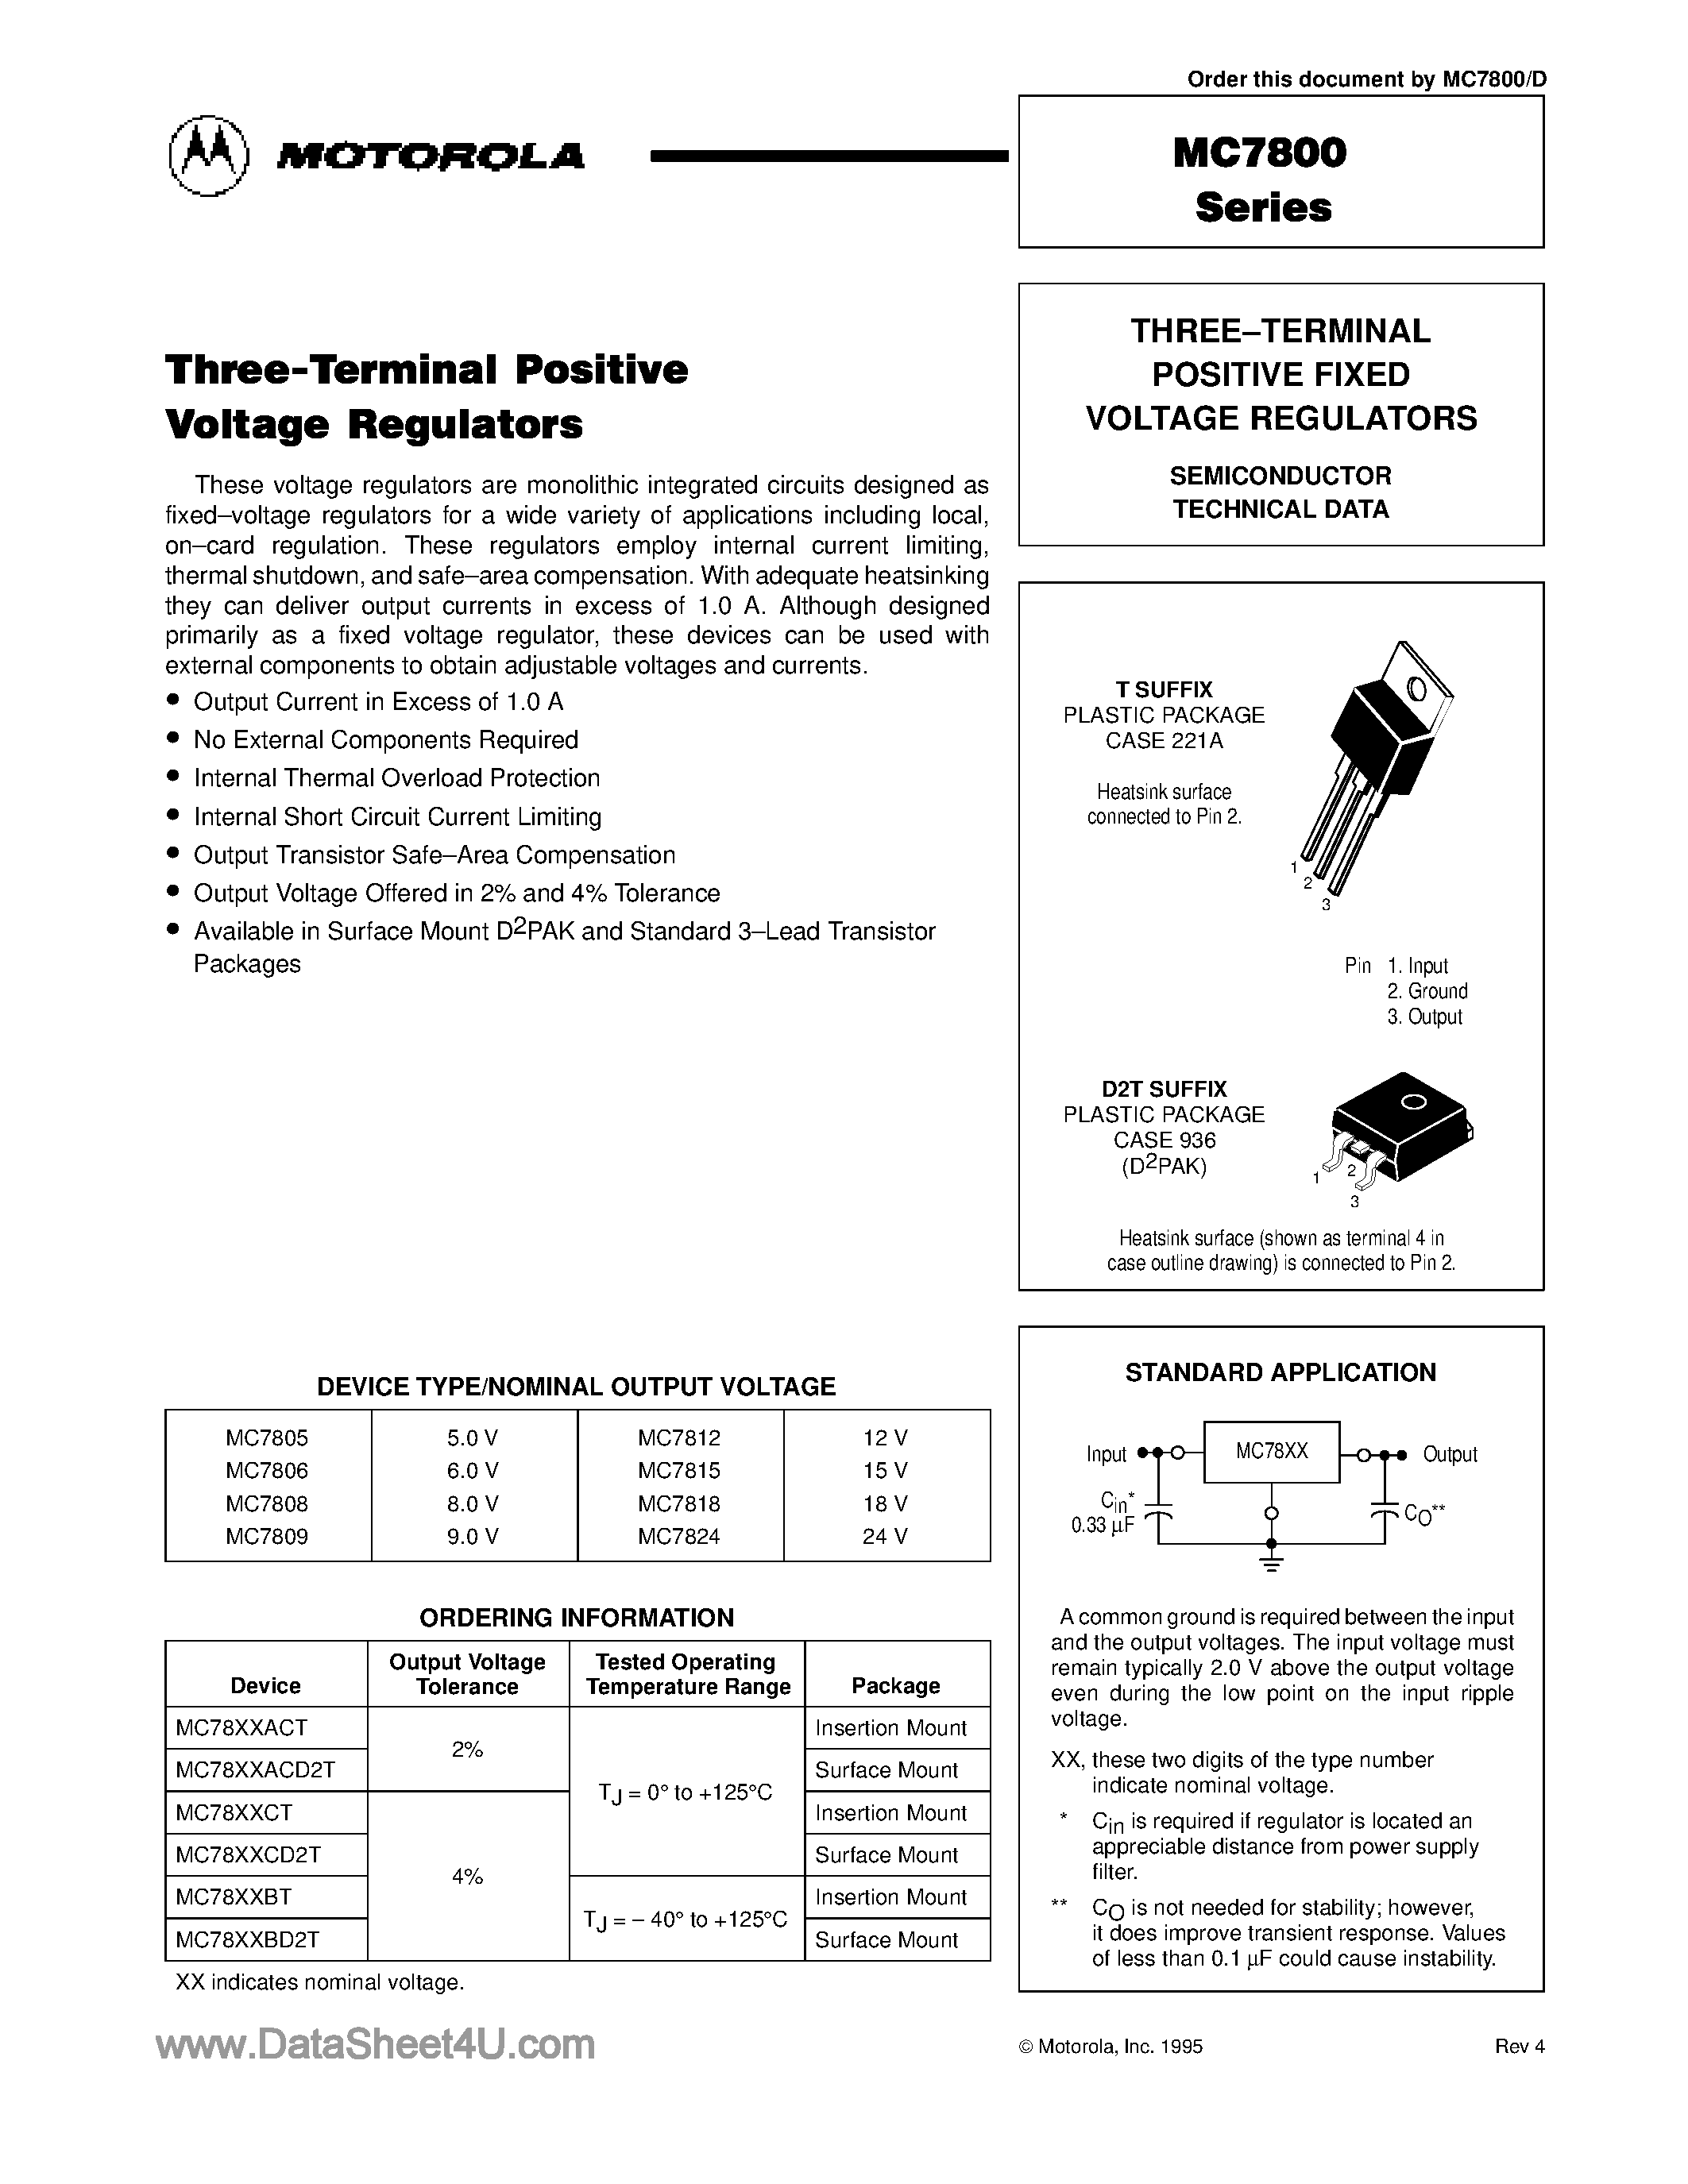 Даташит MC7800 - (MC7800 Series) THREE TERMINAL POSITIVE FIXED VOLTAGE REGULATORS страница 1